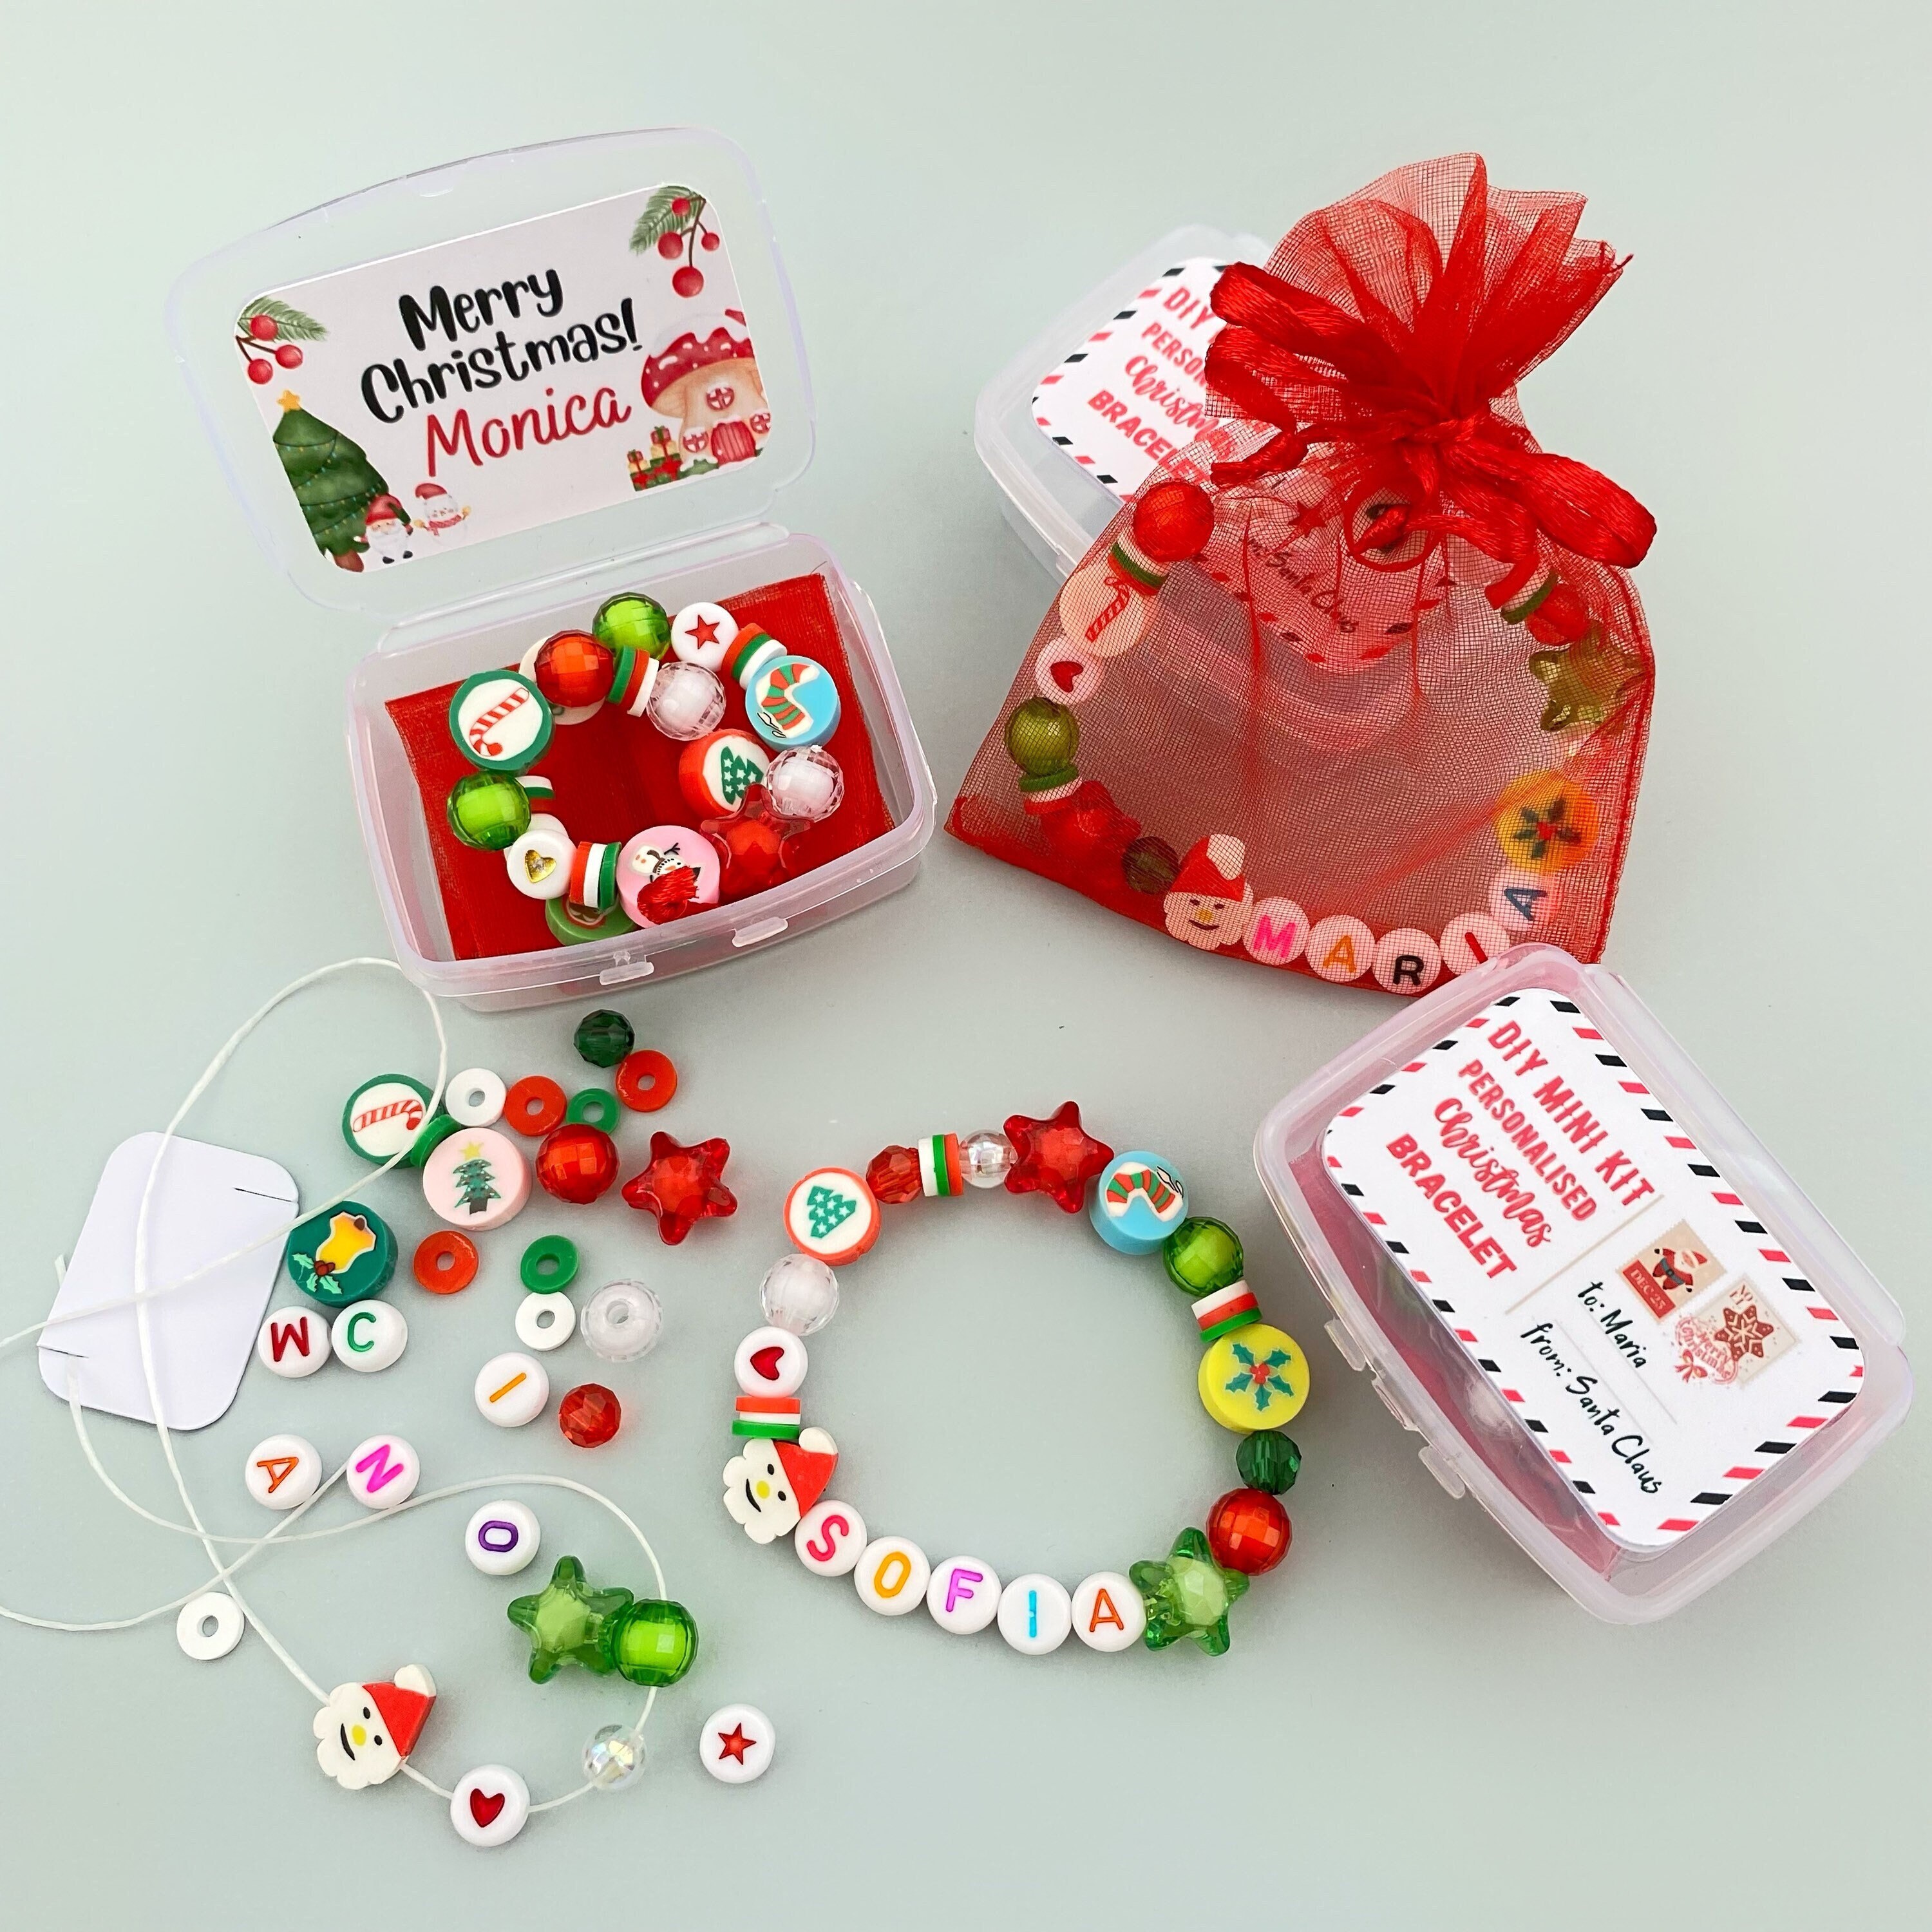 Girls Bracelet Making Kit DIY Craft Arts Christmas Gift For Kids